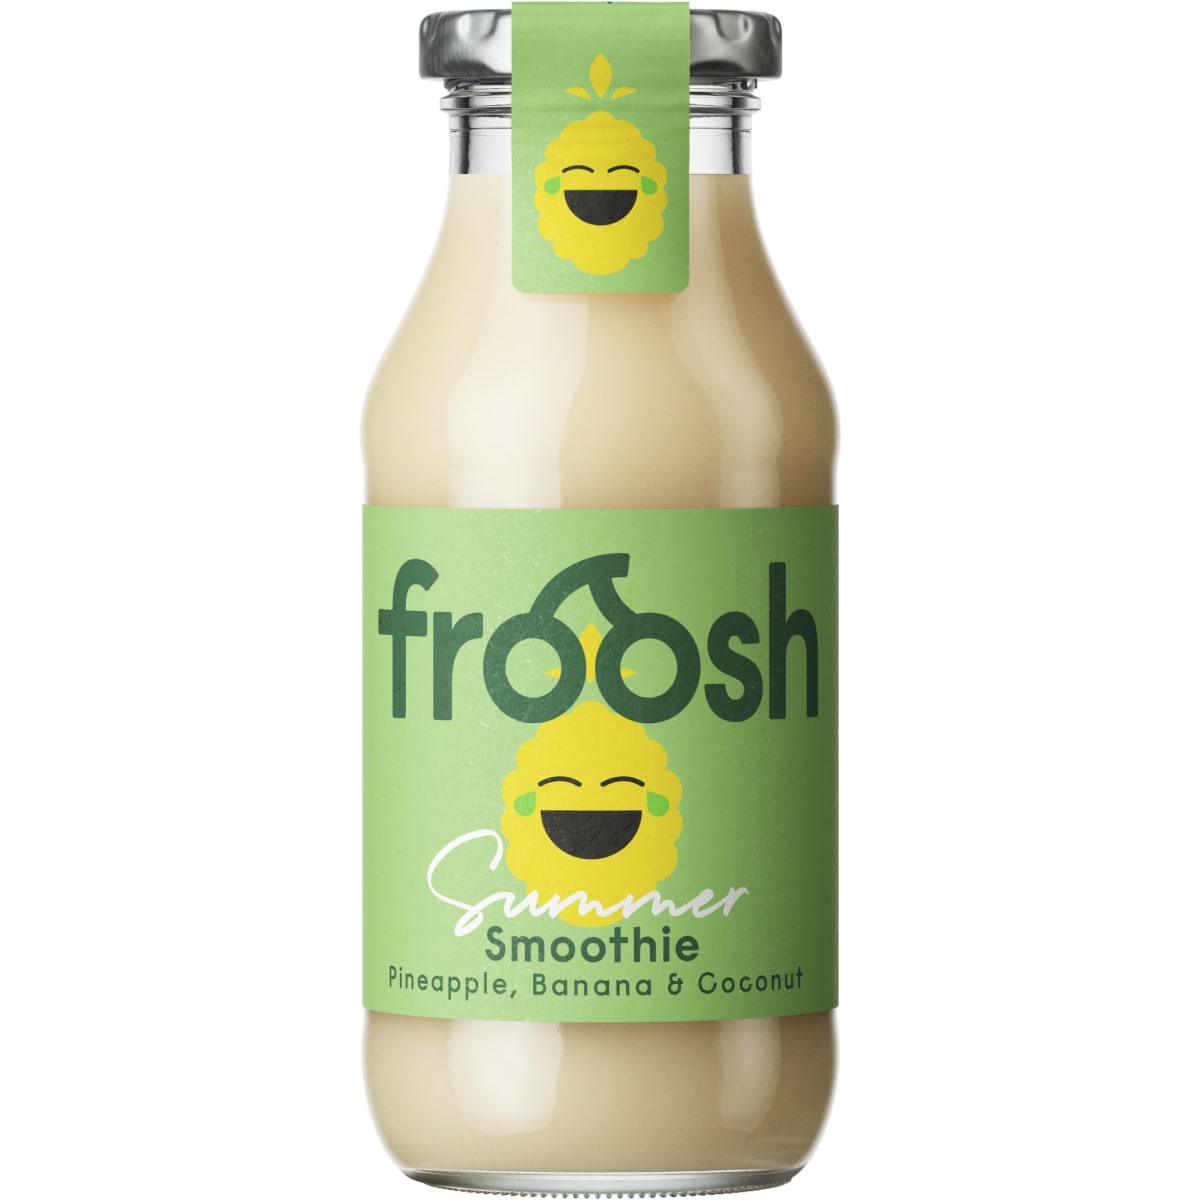 Froosh Ananas-Banaani-Kookos 250 ml smoothie  verkkokauppa